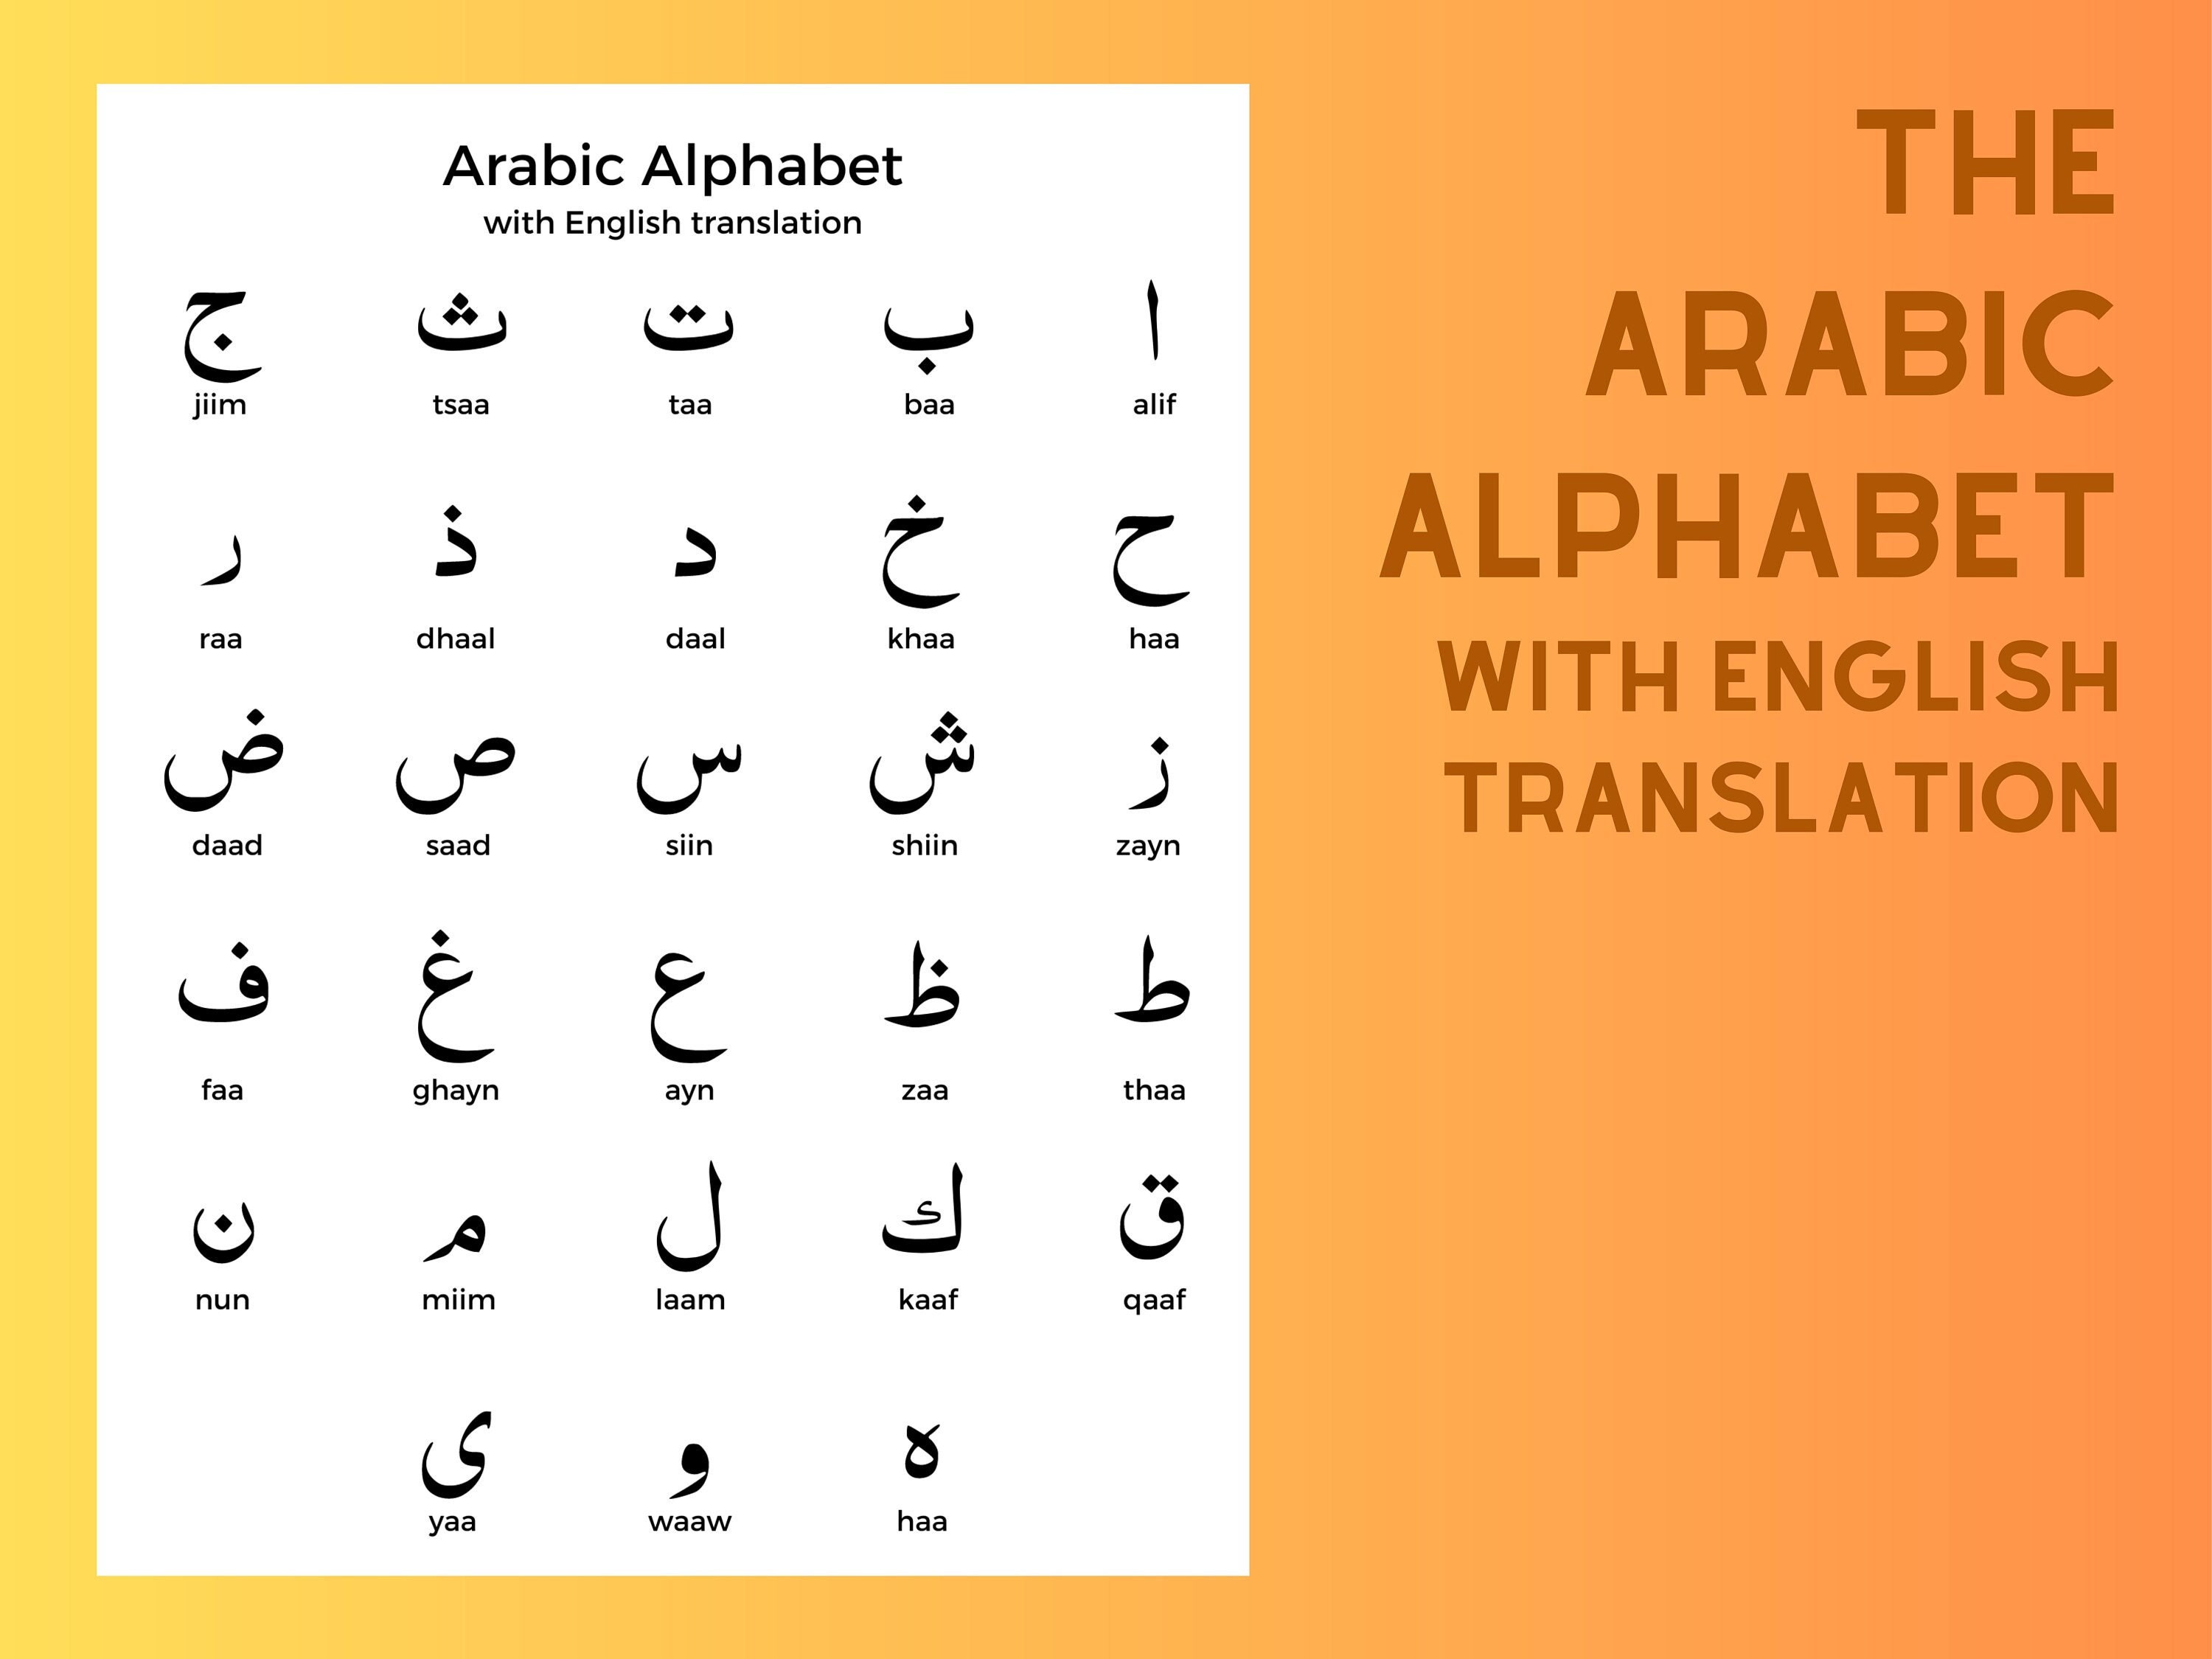 Arabic Alphabet With English Translation Reference Sheet